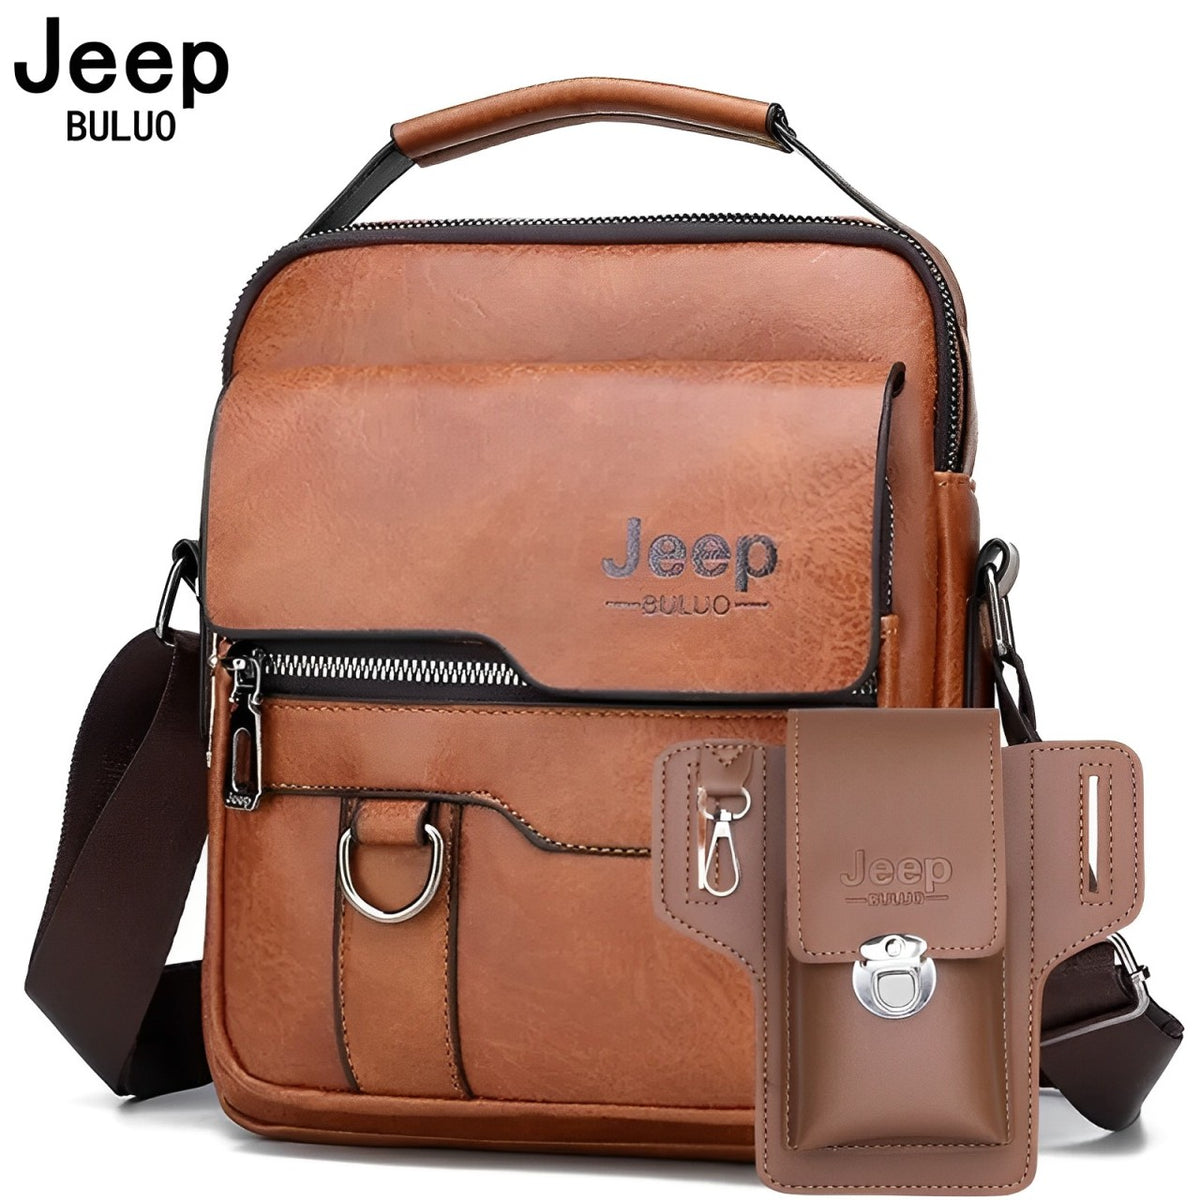 Jeep Buluo Business Bag